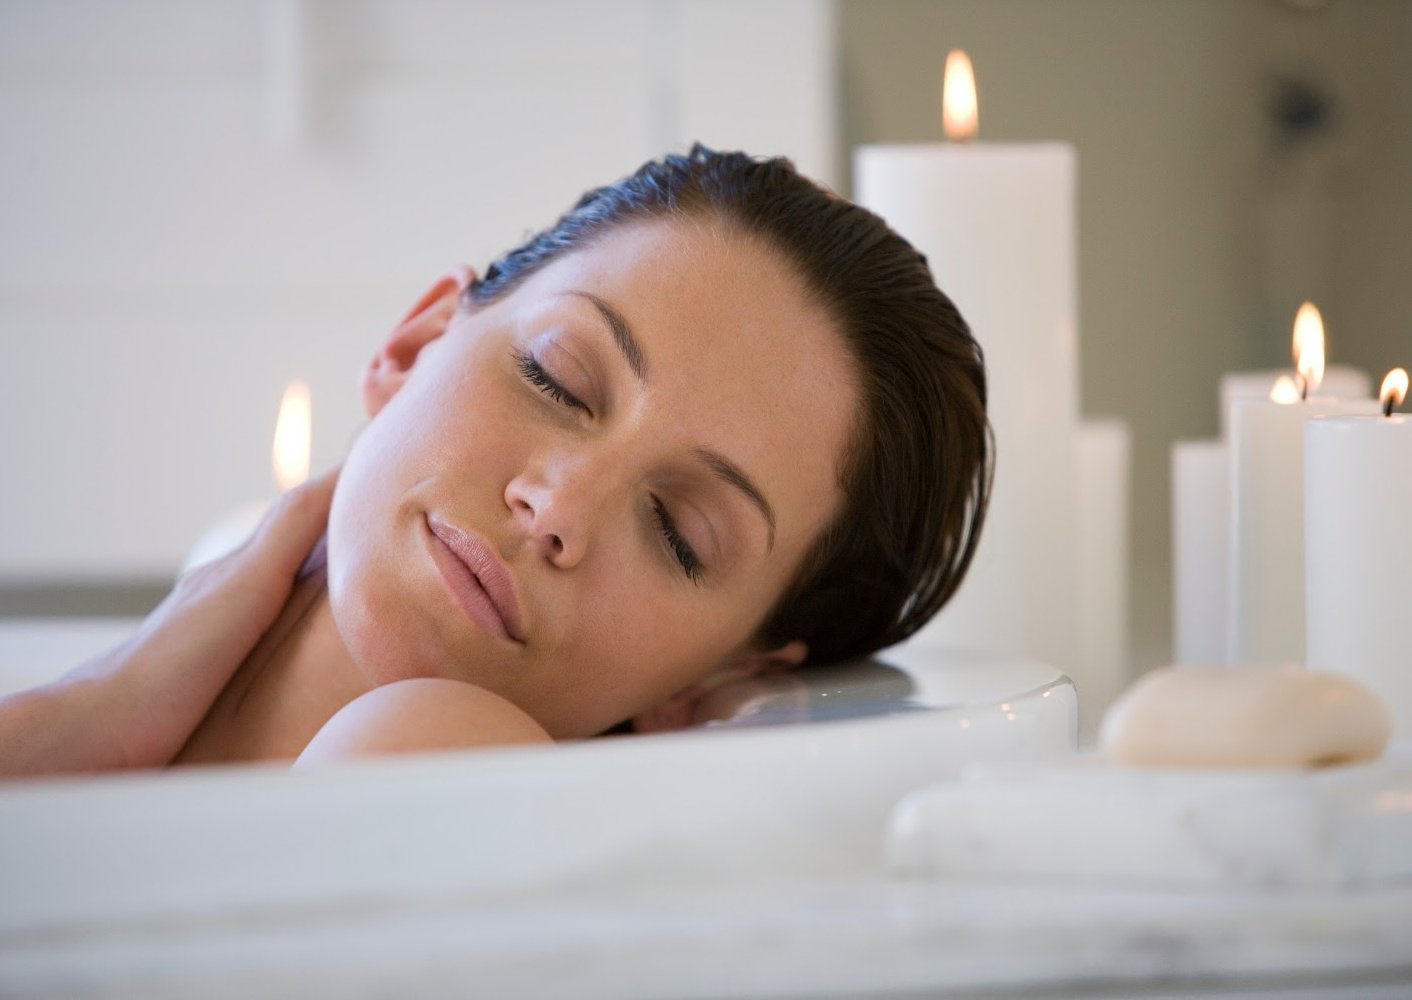 How to Establish a Better Bedtime Routine - Warm bath